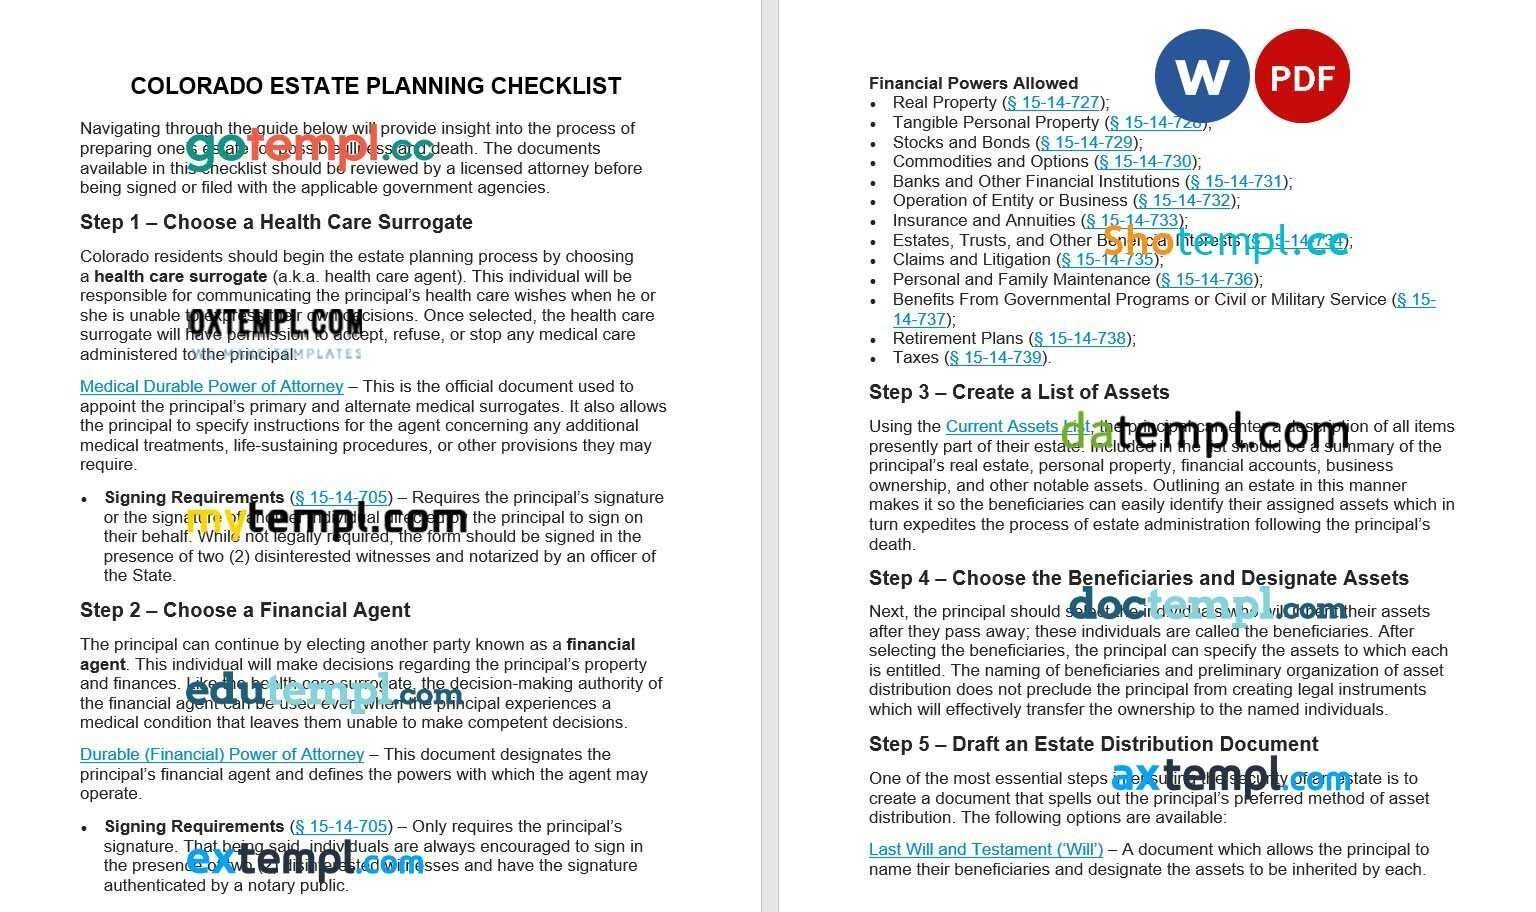 Colorado Estate Planning Checklist Template, fully editable